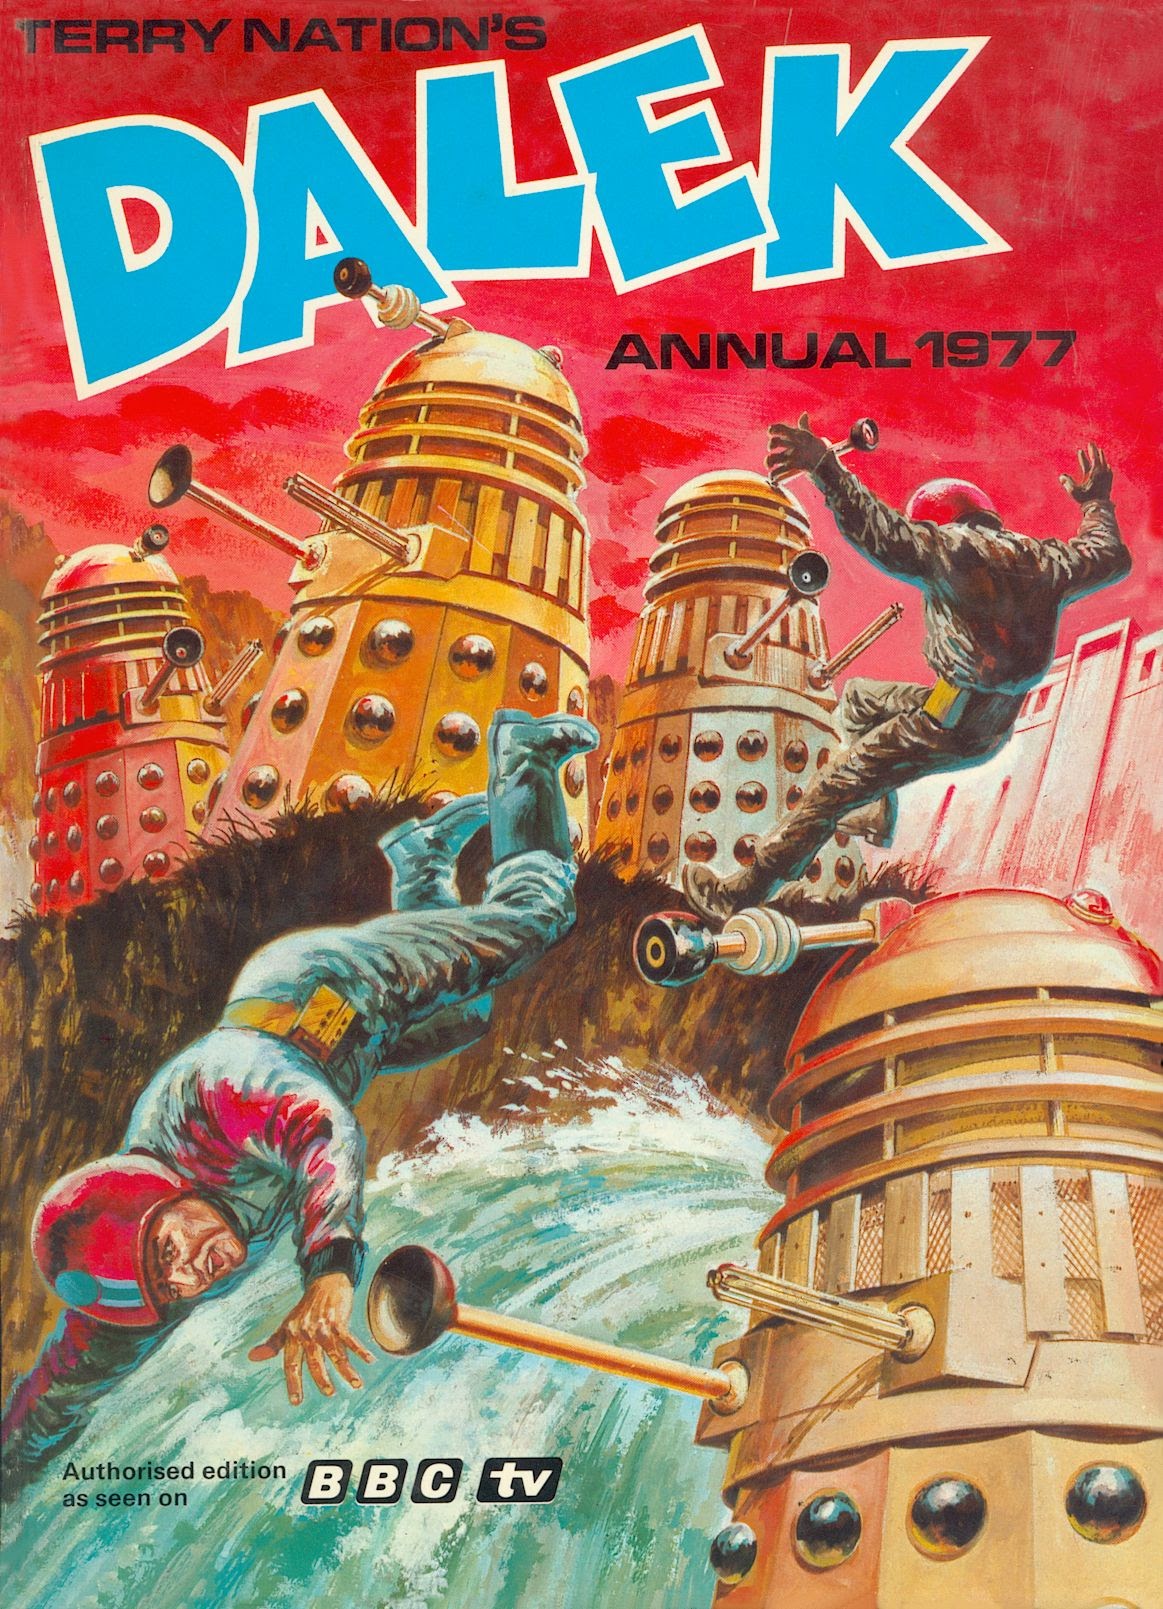 Read online Dalek Annual comic -  Issue #1977 - 1